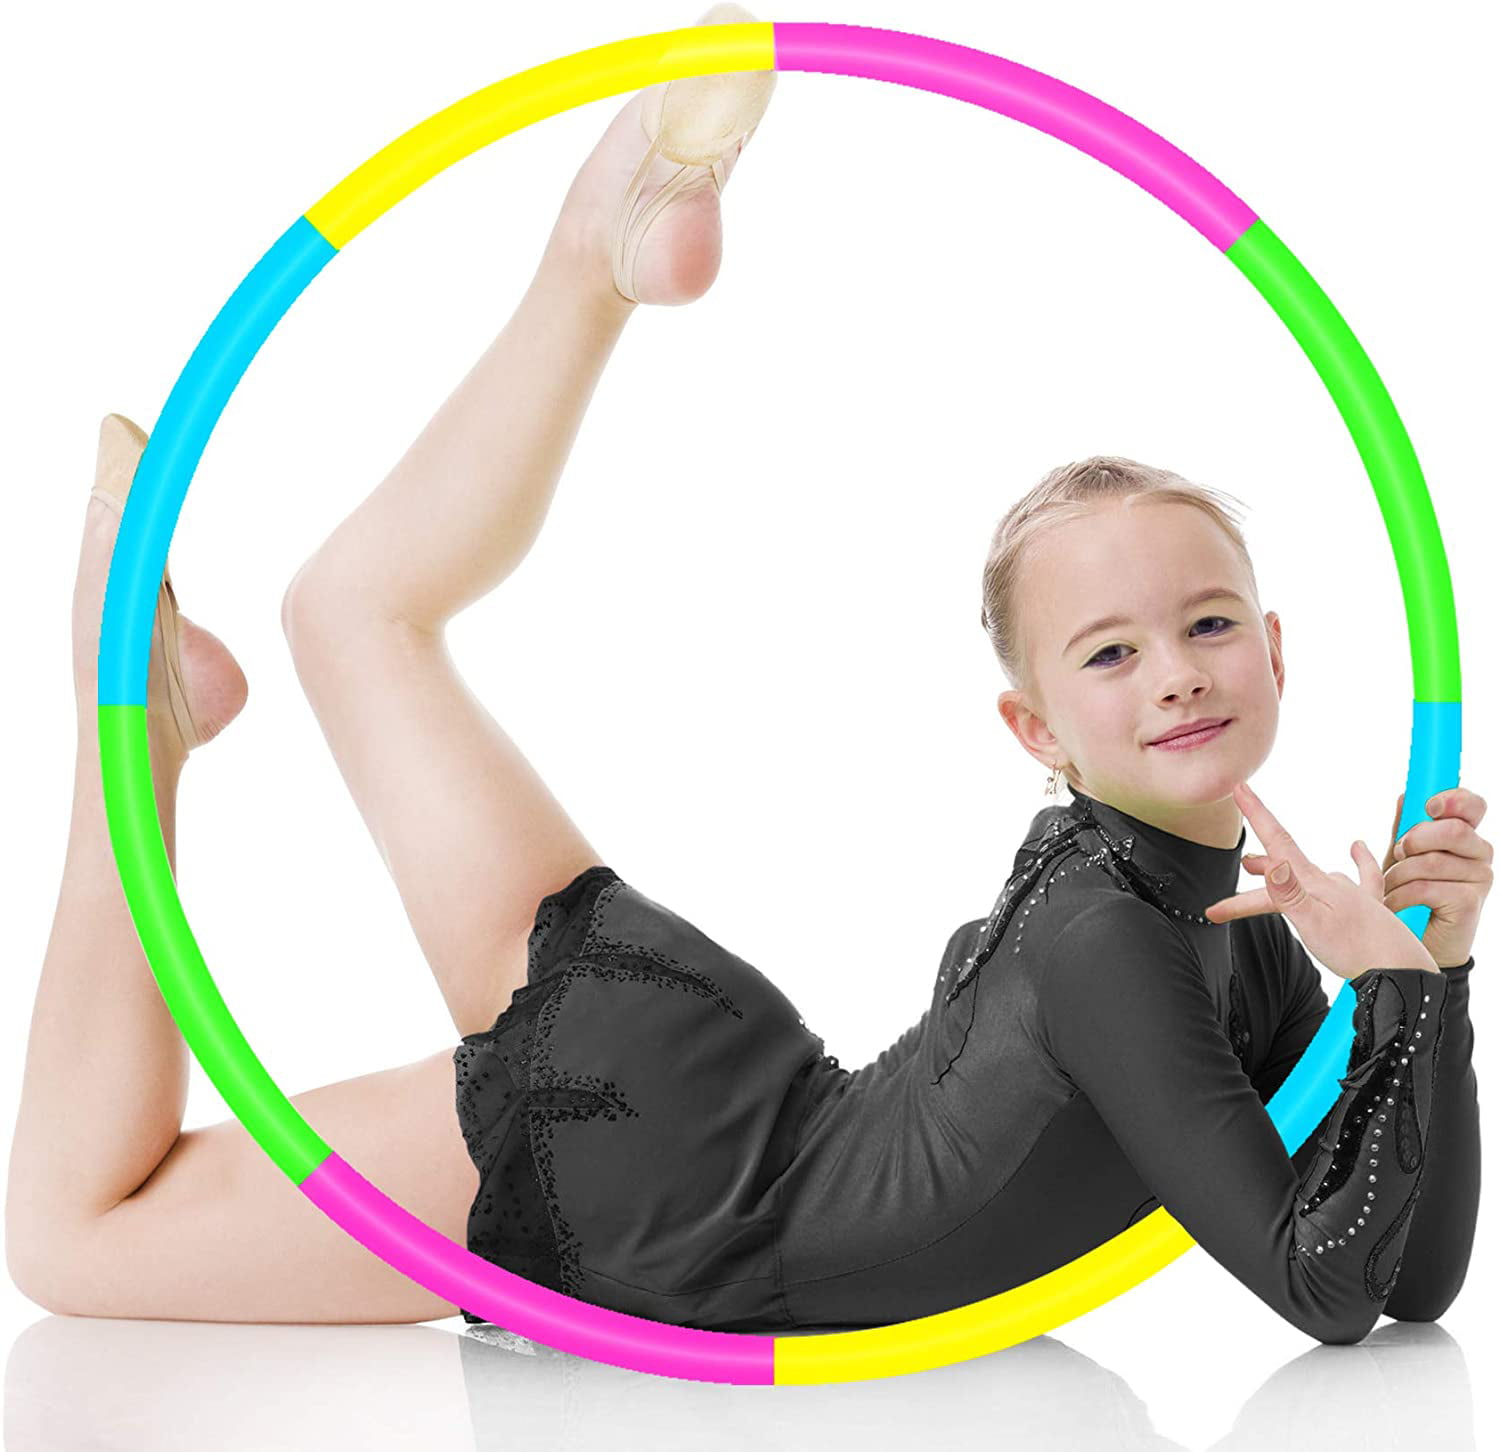 Hula hoop kids exercise fitness plastic weighted hoops kid Indoor Outdoor Play 